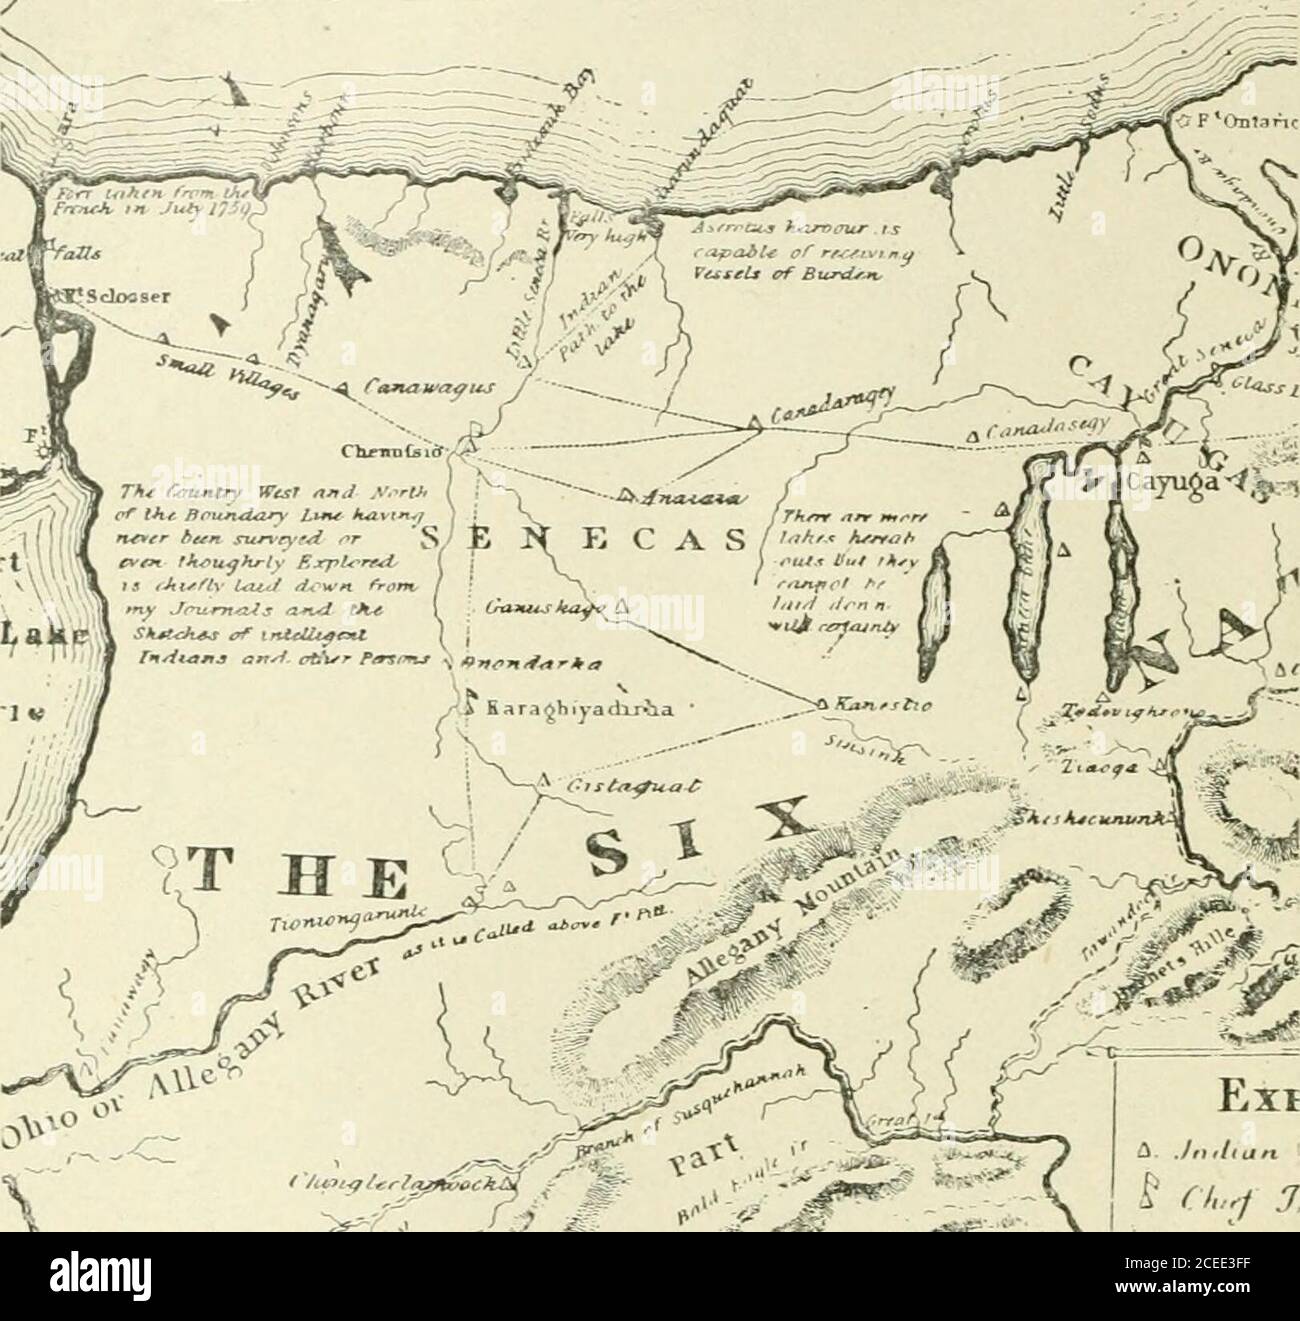 . The Westward Movement; the colonies and the Republic west of the Alleghanies, 1763-1798; with full cartographical illustrations from contemporary sources. LAKE ON TA RIO. j ?t?ti*nrii*i/?/,/ut/f i eft** rtr ,V/ttl*nJ pirptr u ni*if*f that part wttAw wK^rA. tArr pruistf-s ft ifSrftthf nufwJUsS tsof Vast estfUhtjny t-&rfft/ oesrupttUhythe-tf-Utprndiimt^ T^u Mr^^t- - *•*• *• **v&gt;(^ /UJ tAry rf^ttJf h ttJun fhf lim t /.» , / .1f7-r/r «{ Firt ffuntrrt ? &lt;: n*ijc ka*-* past 0ftAs i*tr*i*f*t i»•** *r*iifytiffCwUhjnl/iar/ycitTts-* ths jnsr&lt;zrt?ra.f who femt Oi* si£fJt SuJao?« ilt( ,-mt U Stock Photo